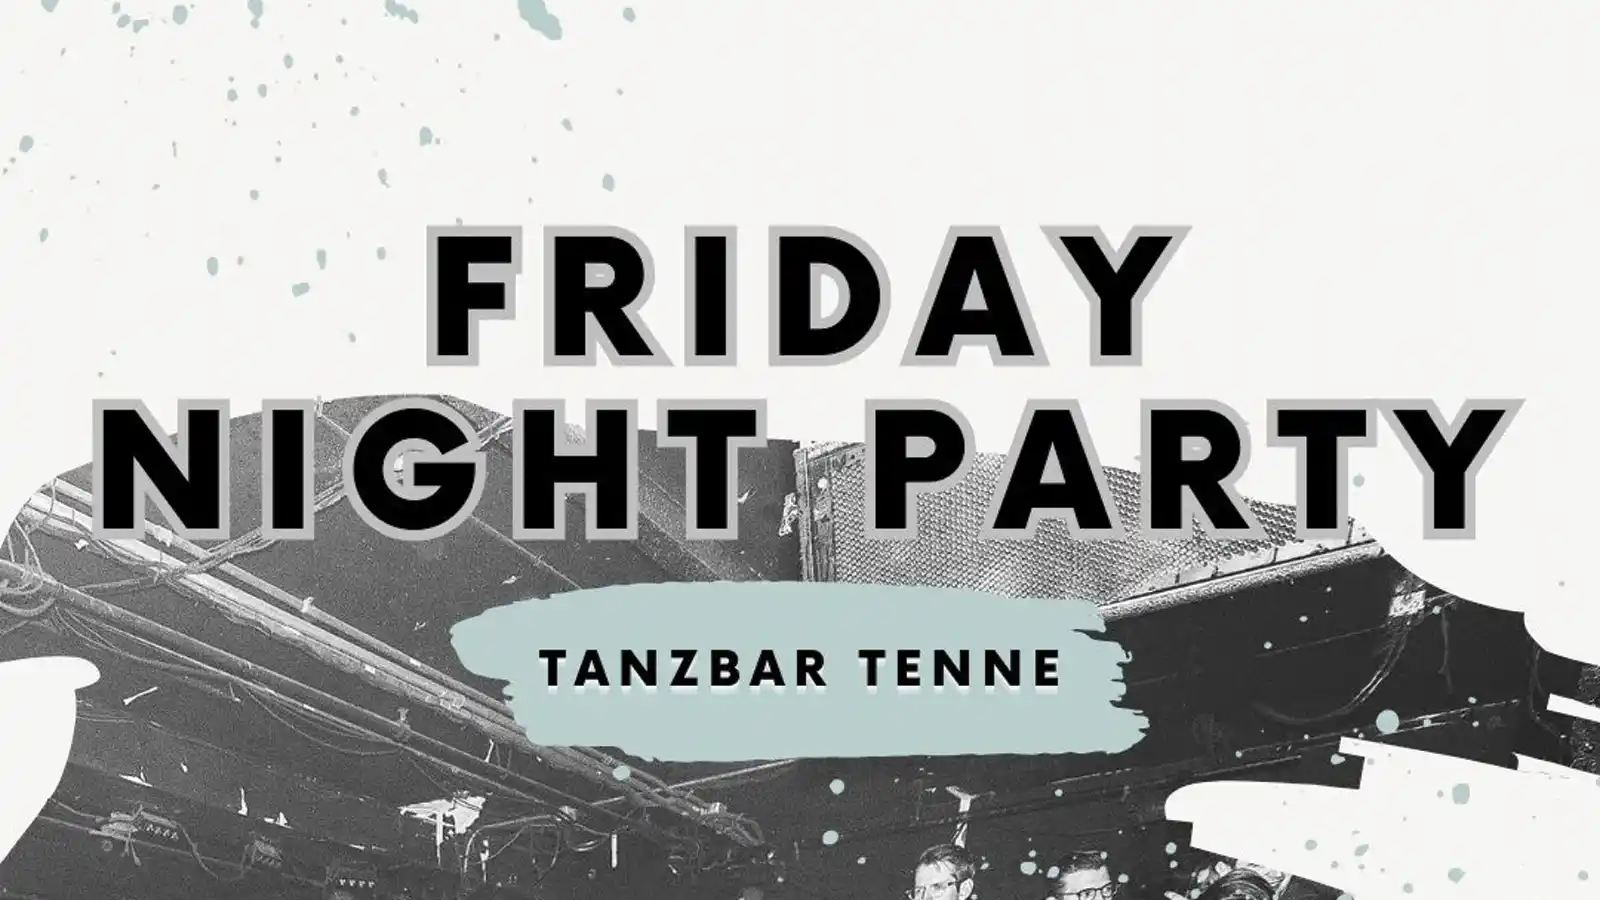 friday night party tanzbar tenne hotel landsknecht